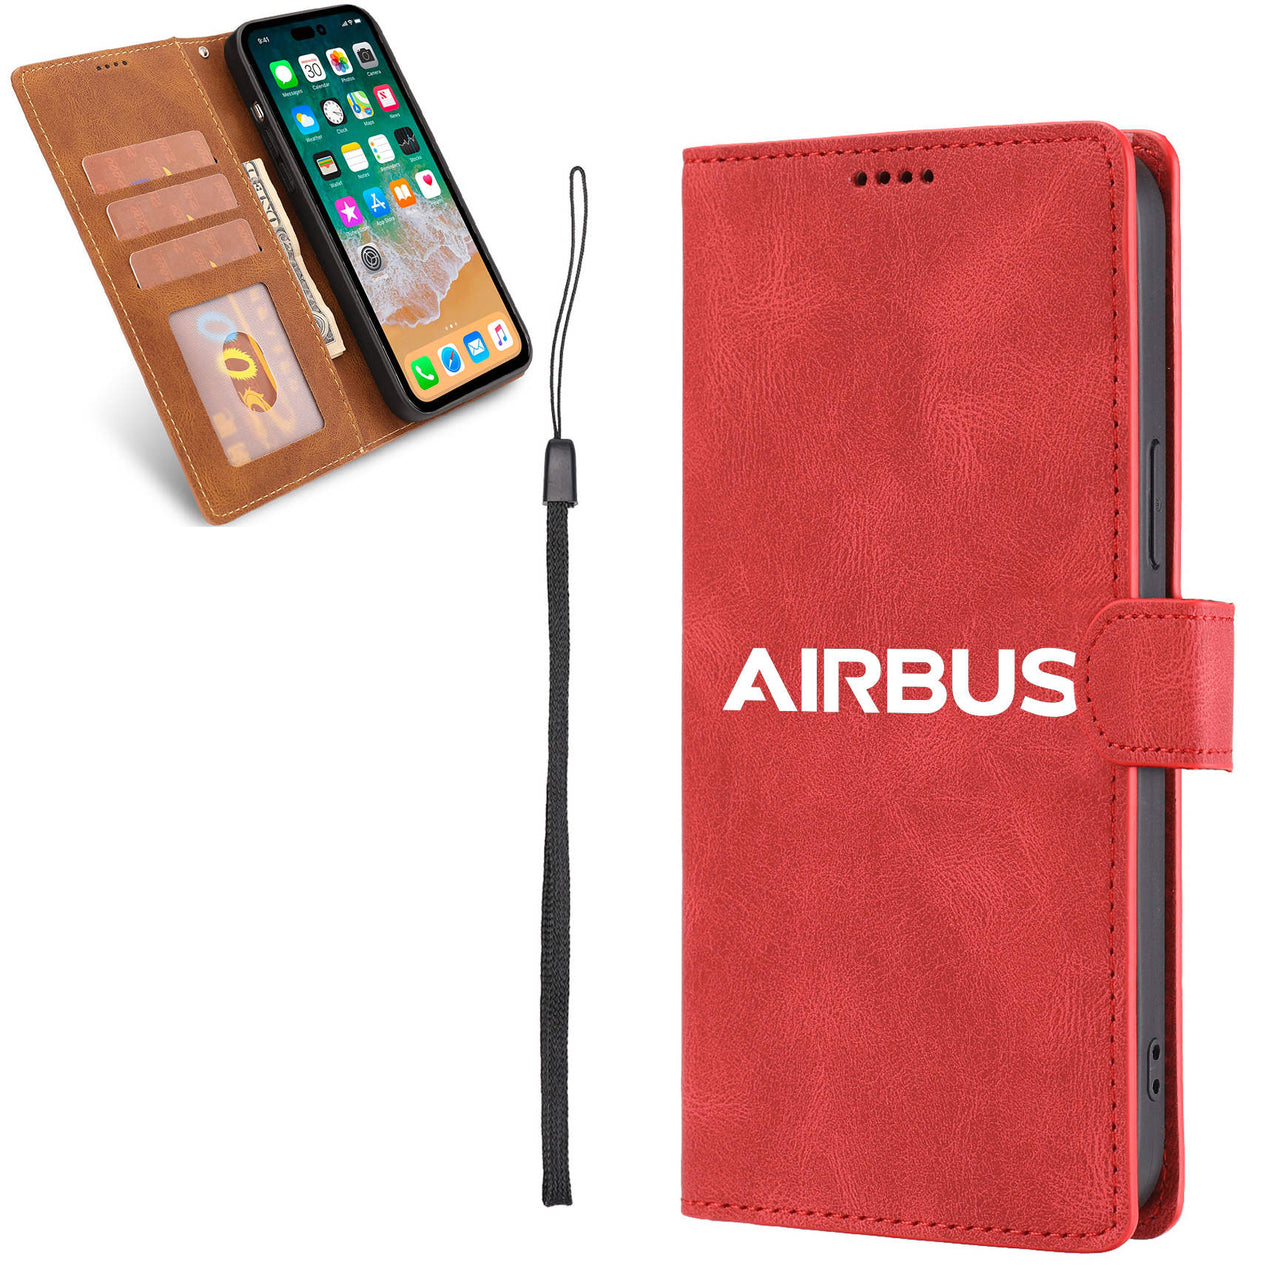 Airbus & Text Designed Leather iPhone Cases